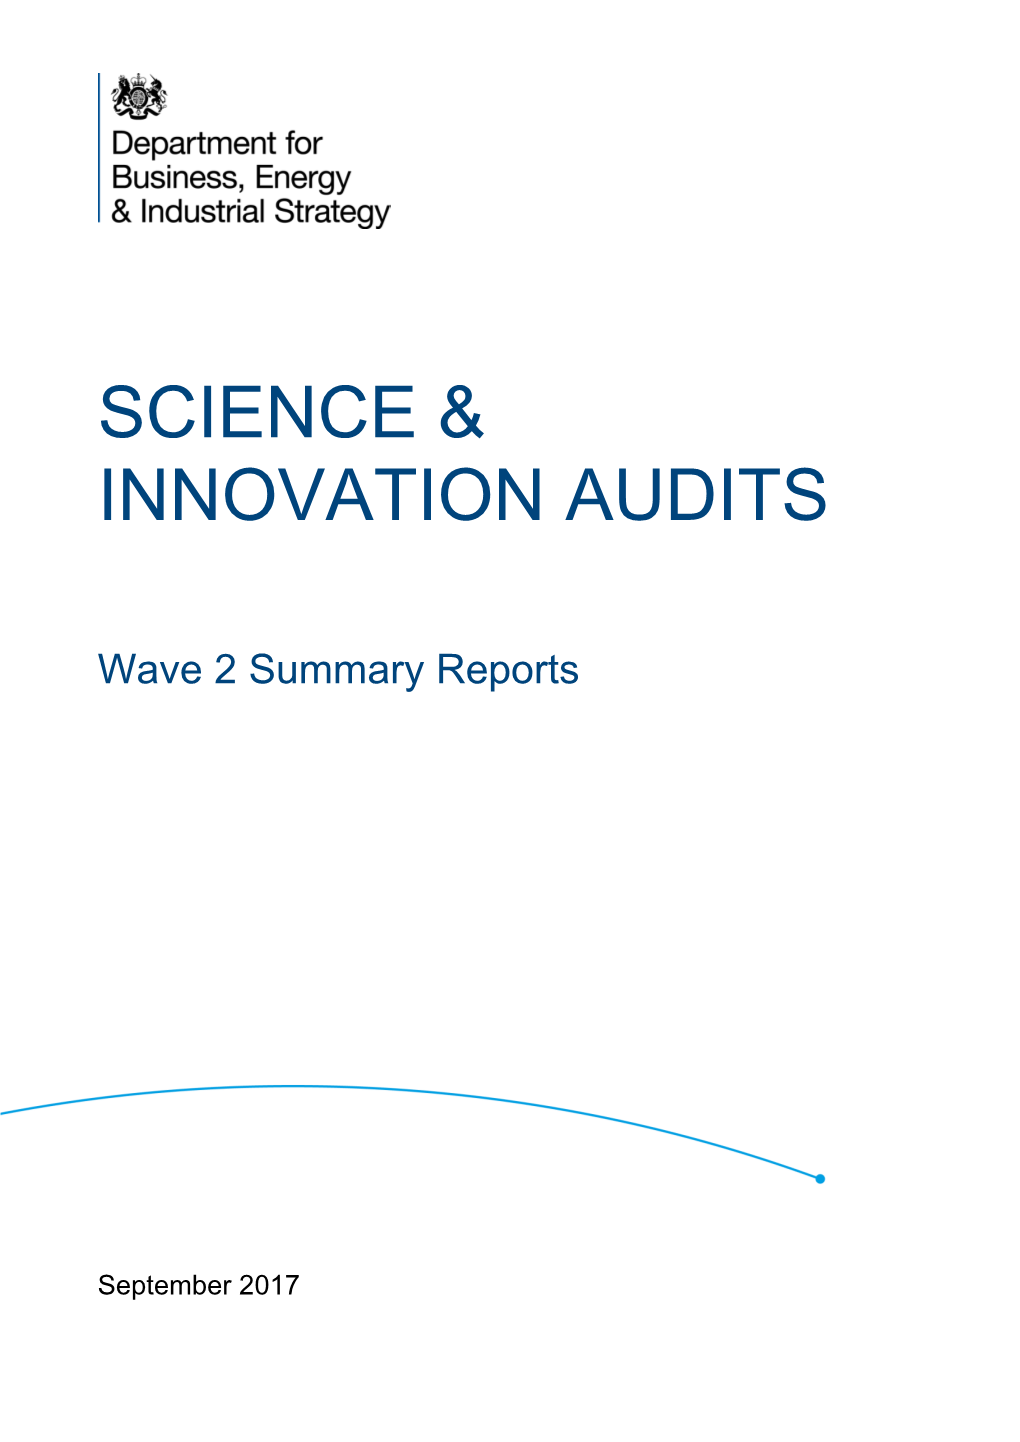 Science & Innovation Audits